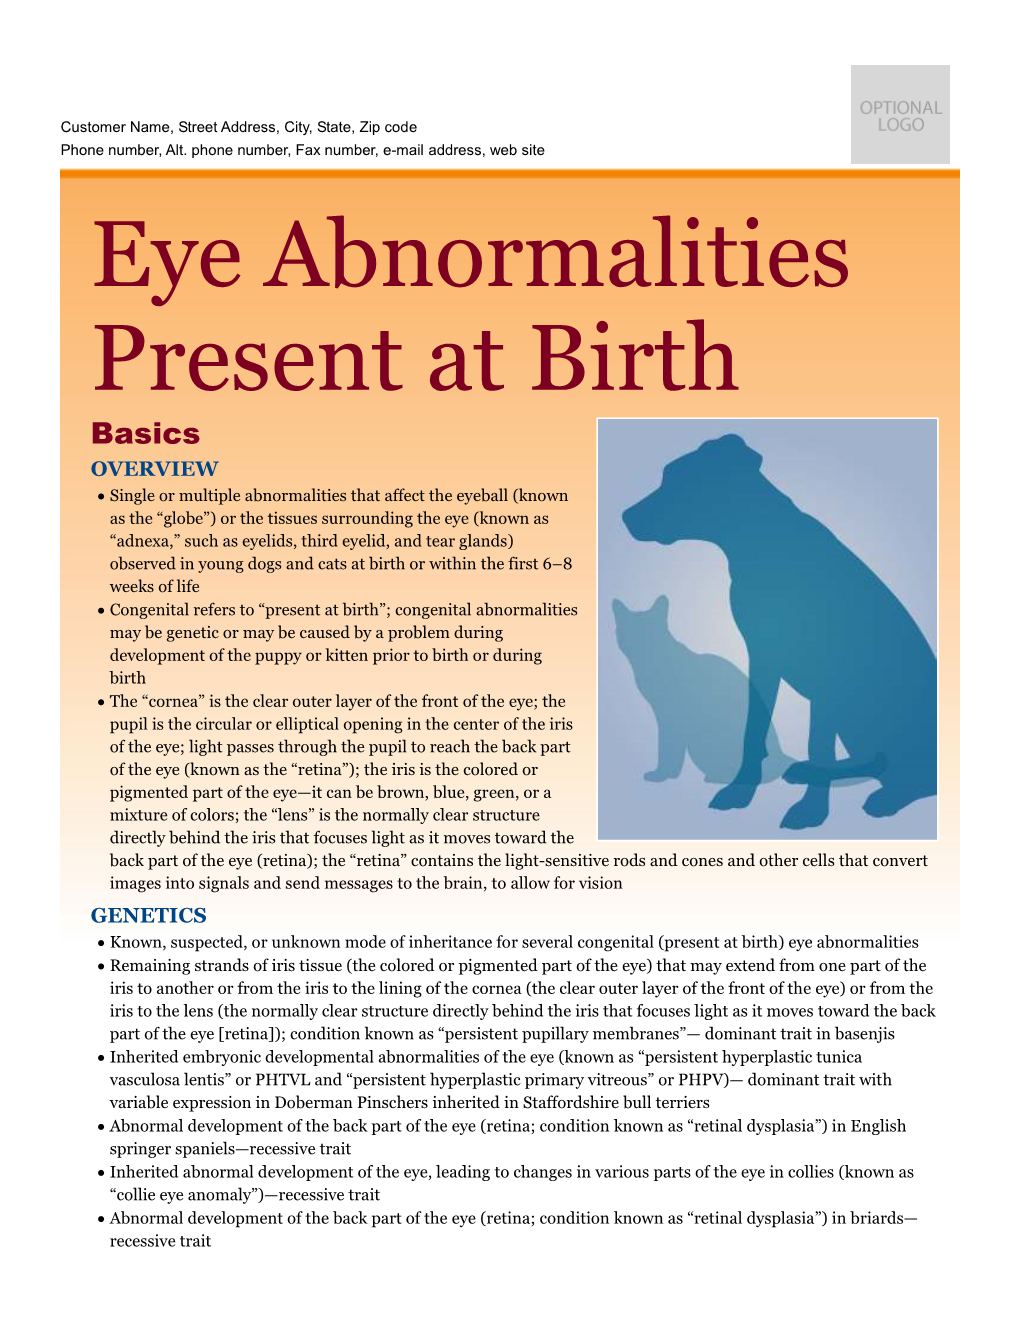 Eye Abnormalities Present at Birth